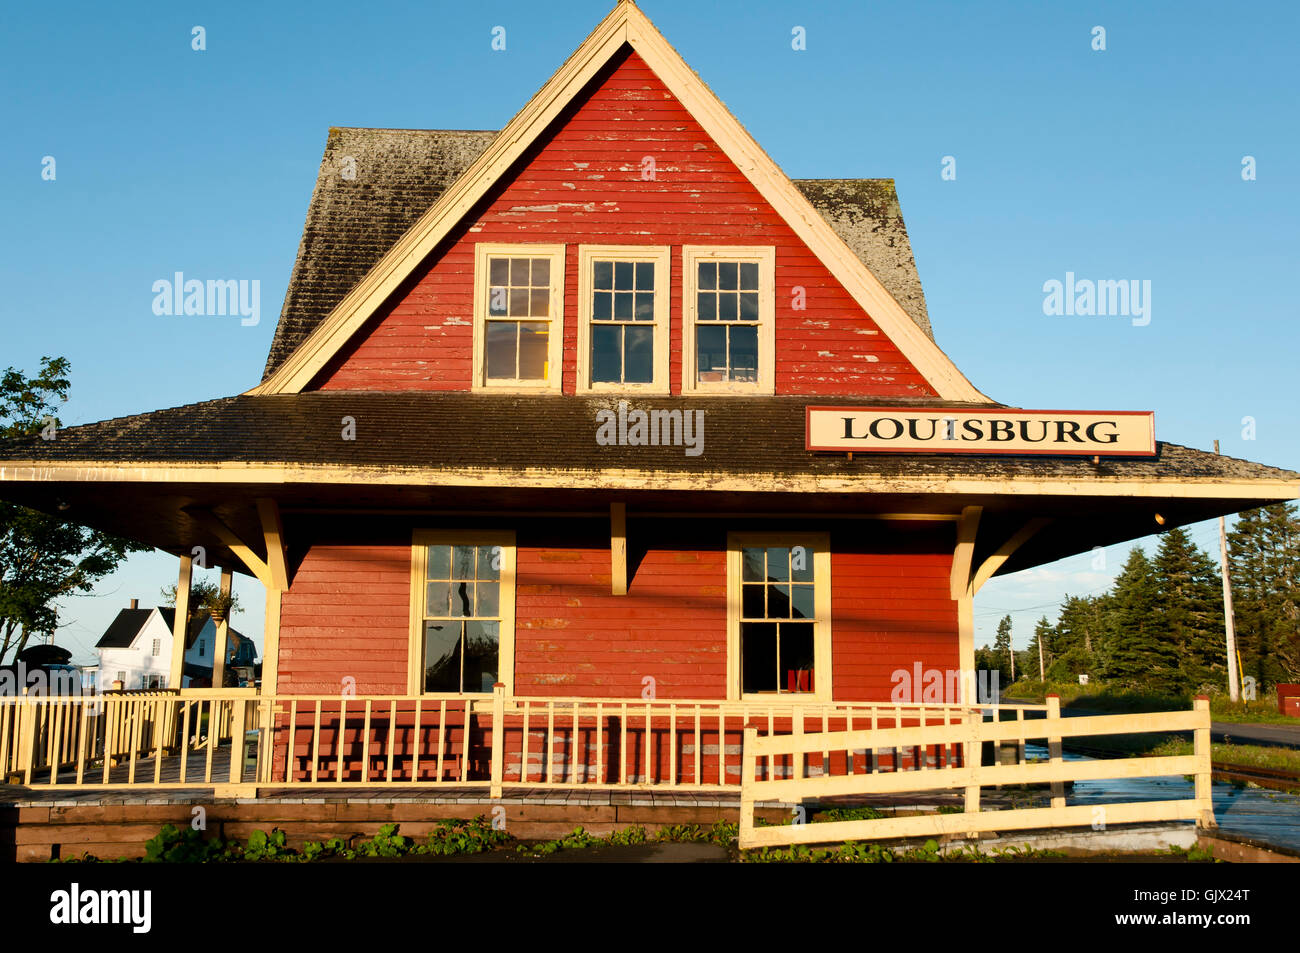 Wooden Building in Louisbourg - Nova Scotia - Canada Stock Photo